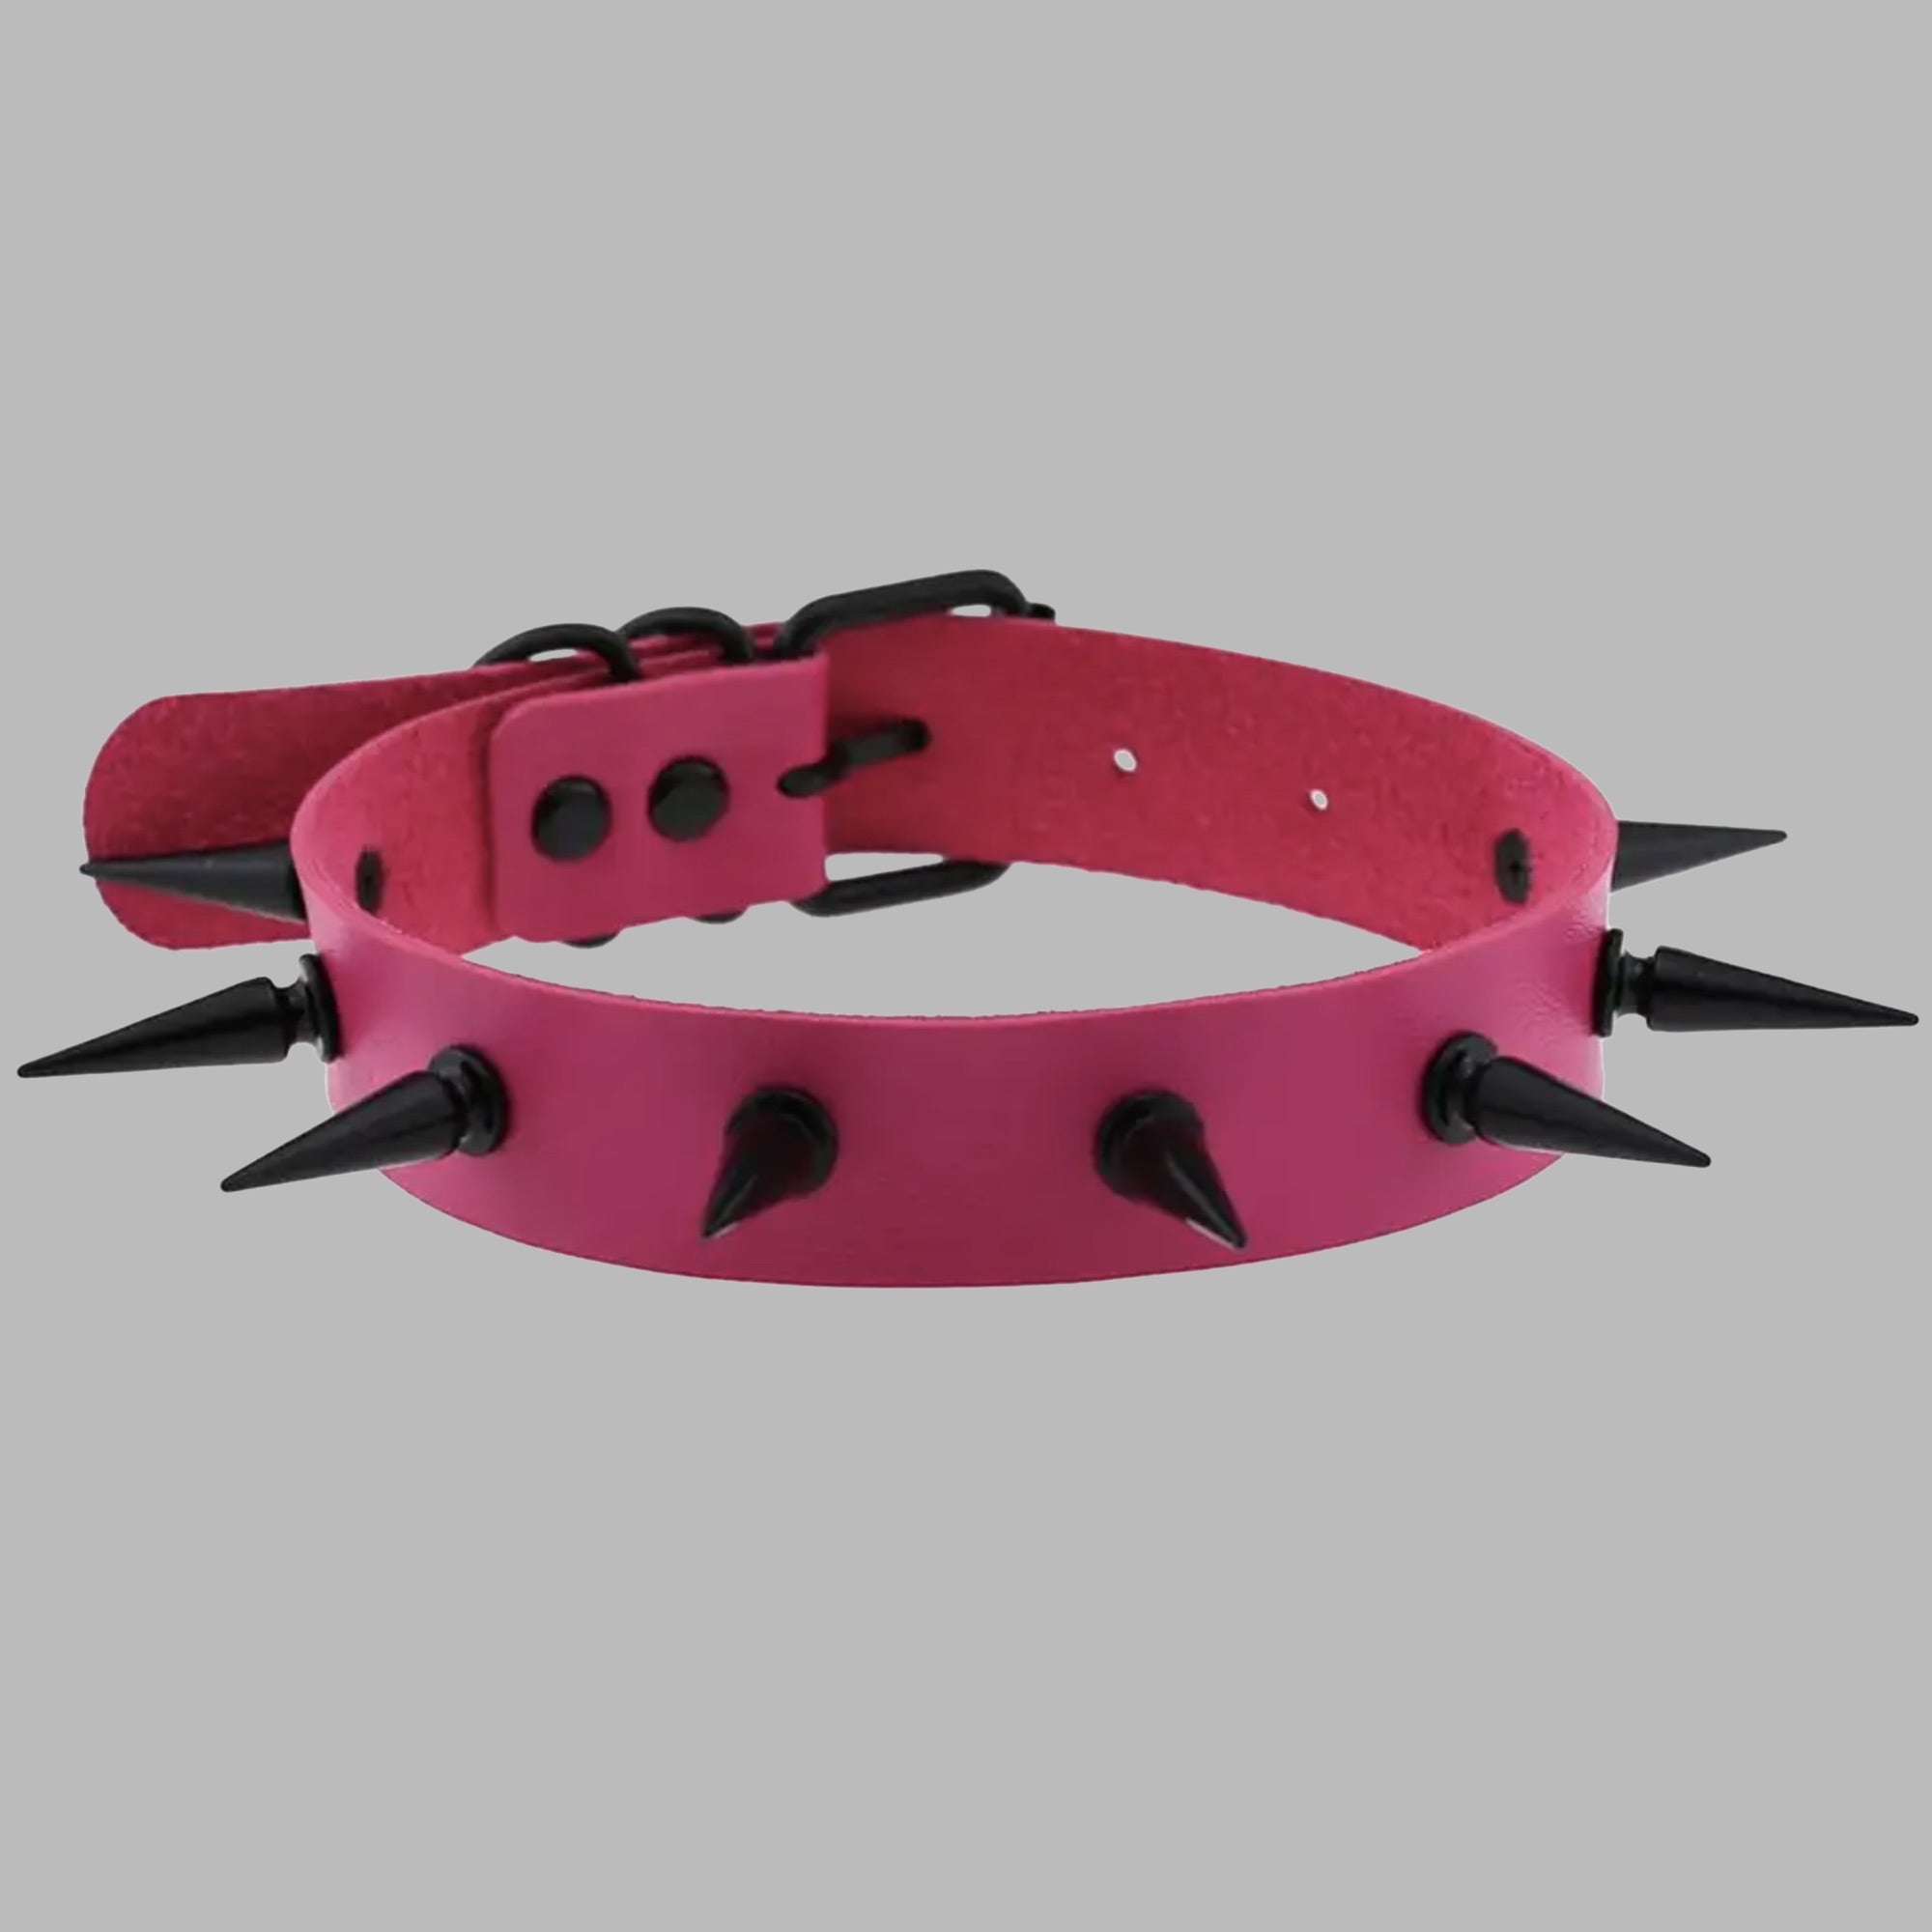 2 Inch Spike Collar - Hot Pink & Black